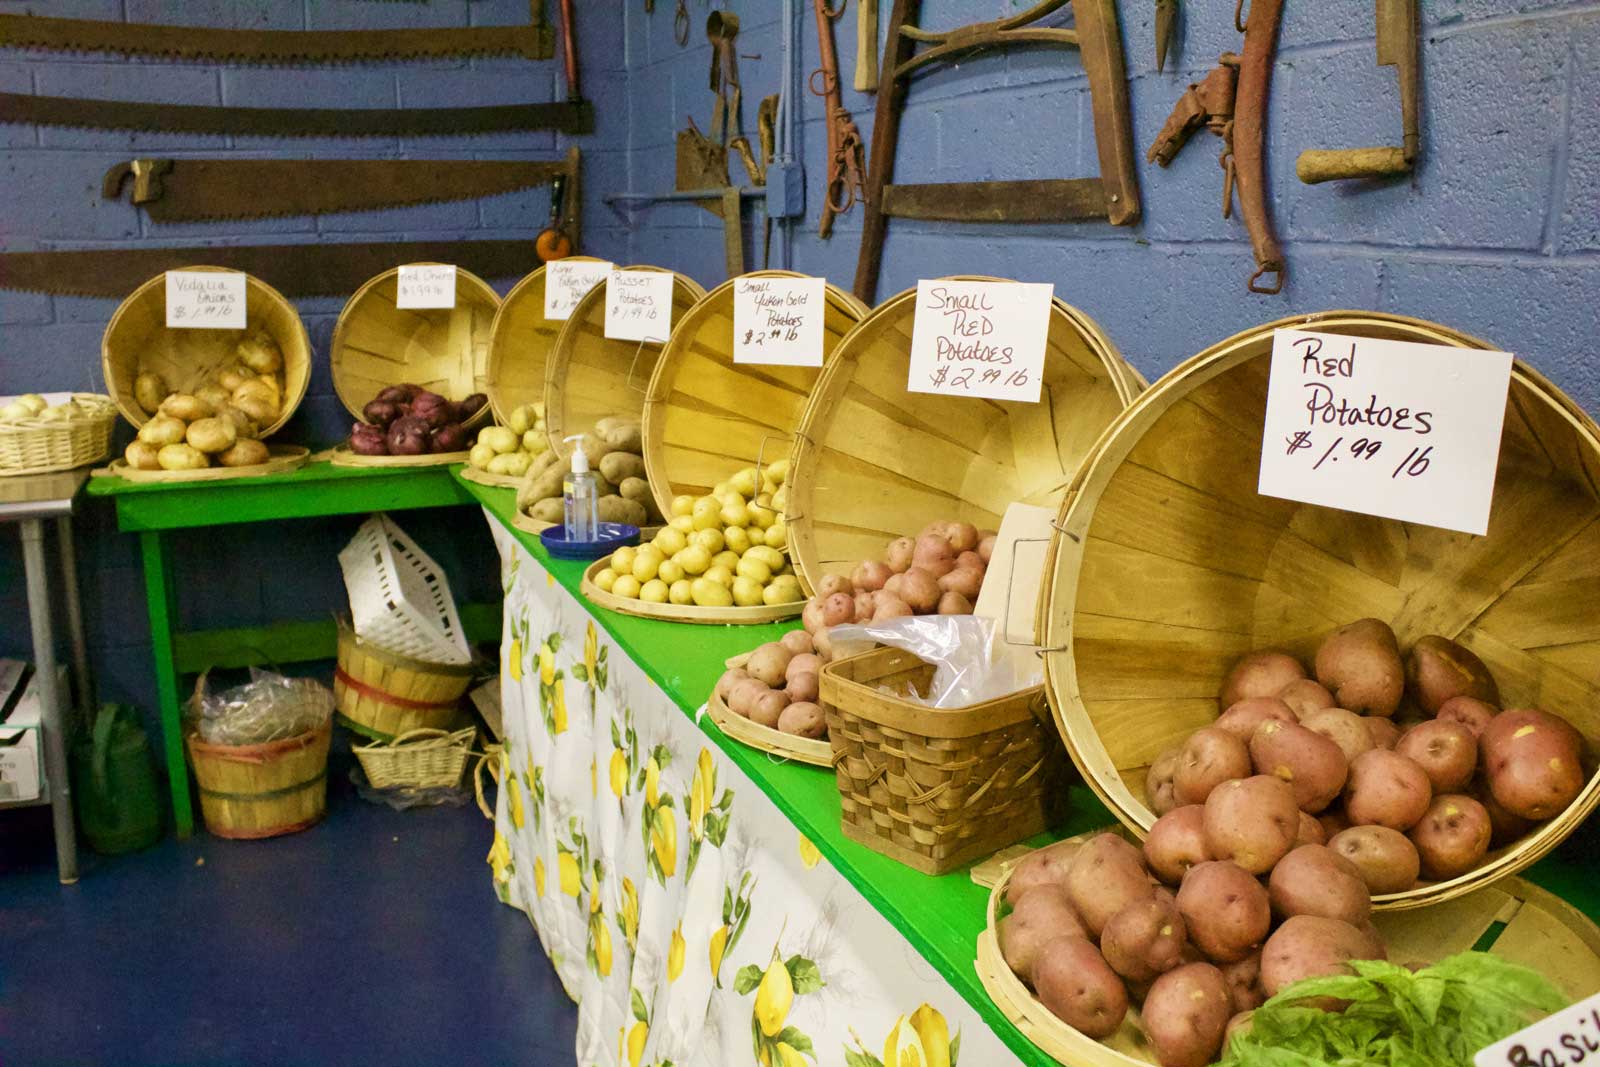 Seven Varieties of Fresh Potatoes at the Farmers Market in Ridgewood NJ